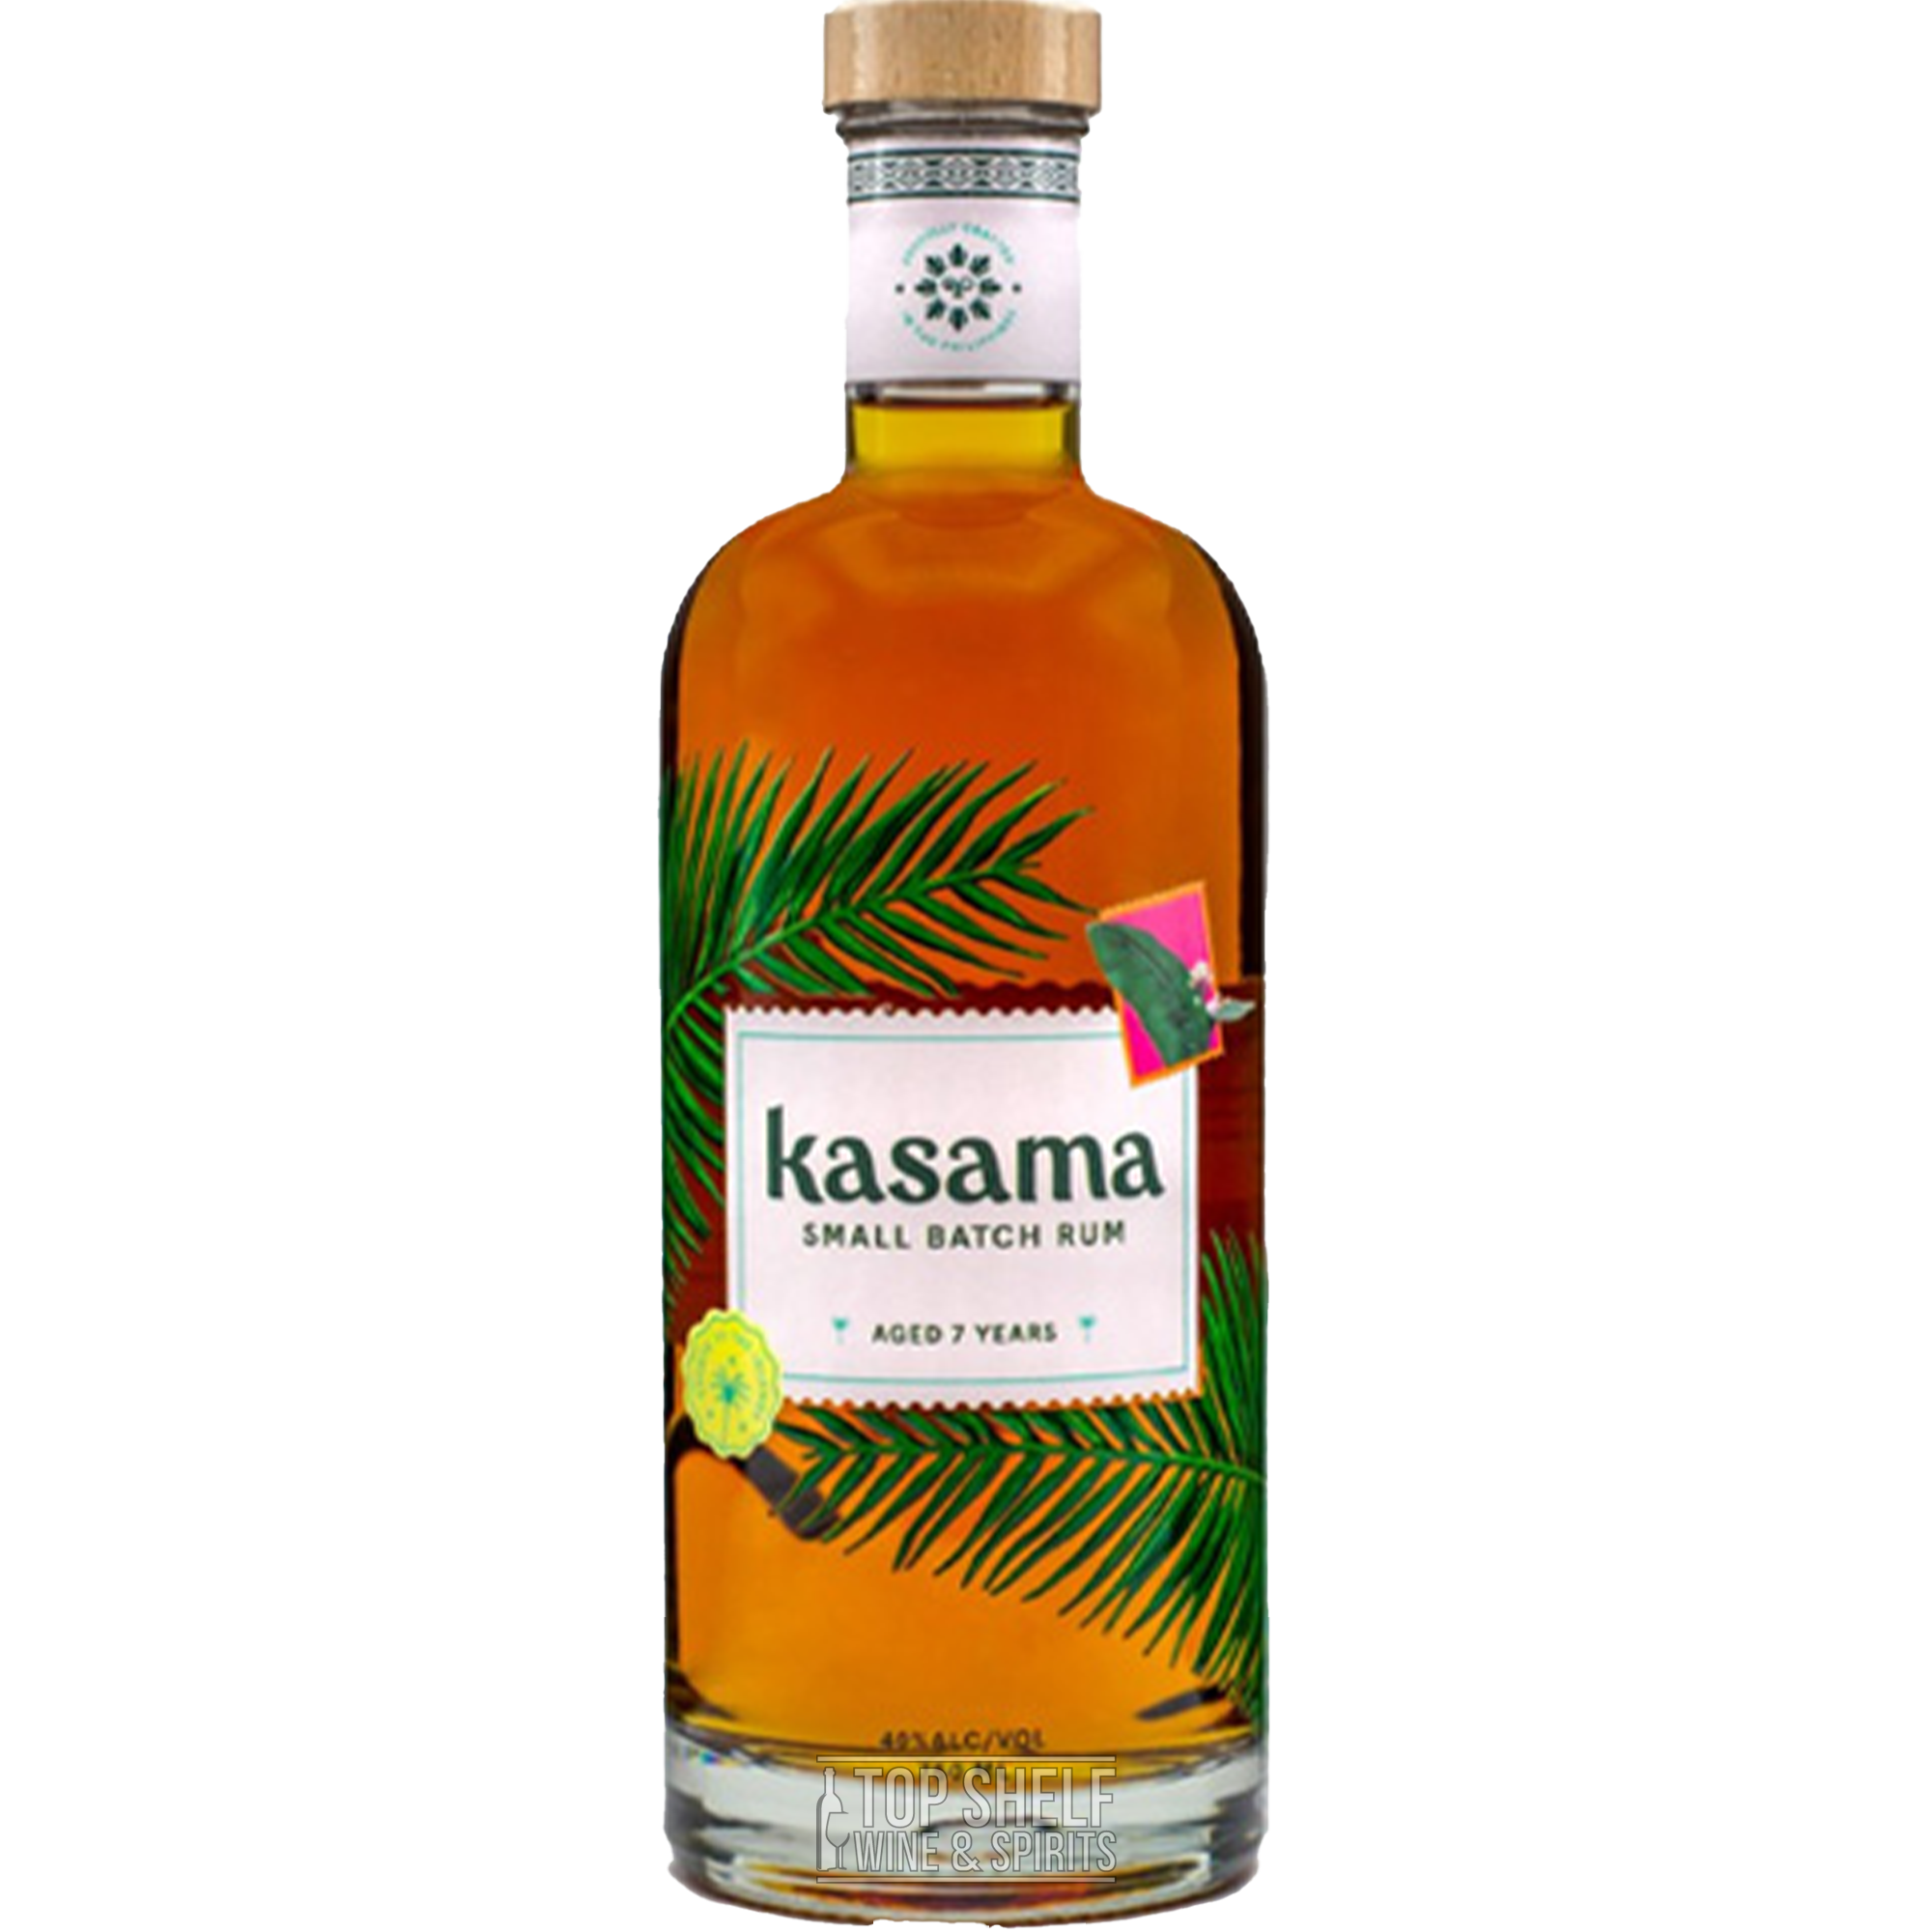 Kasama Small Batch 7 Year Rum